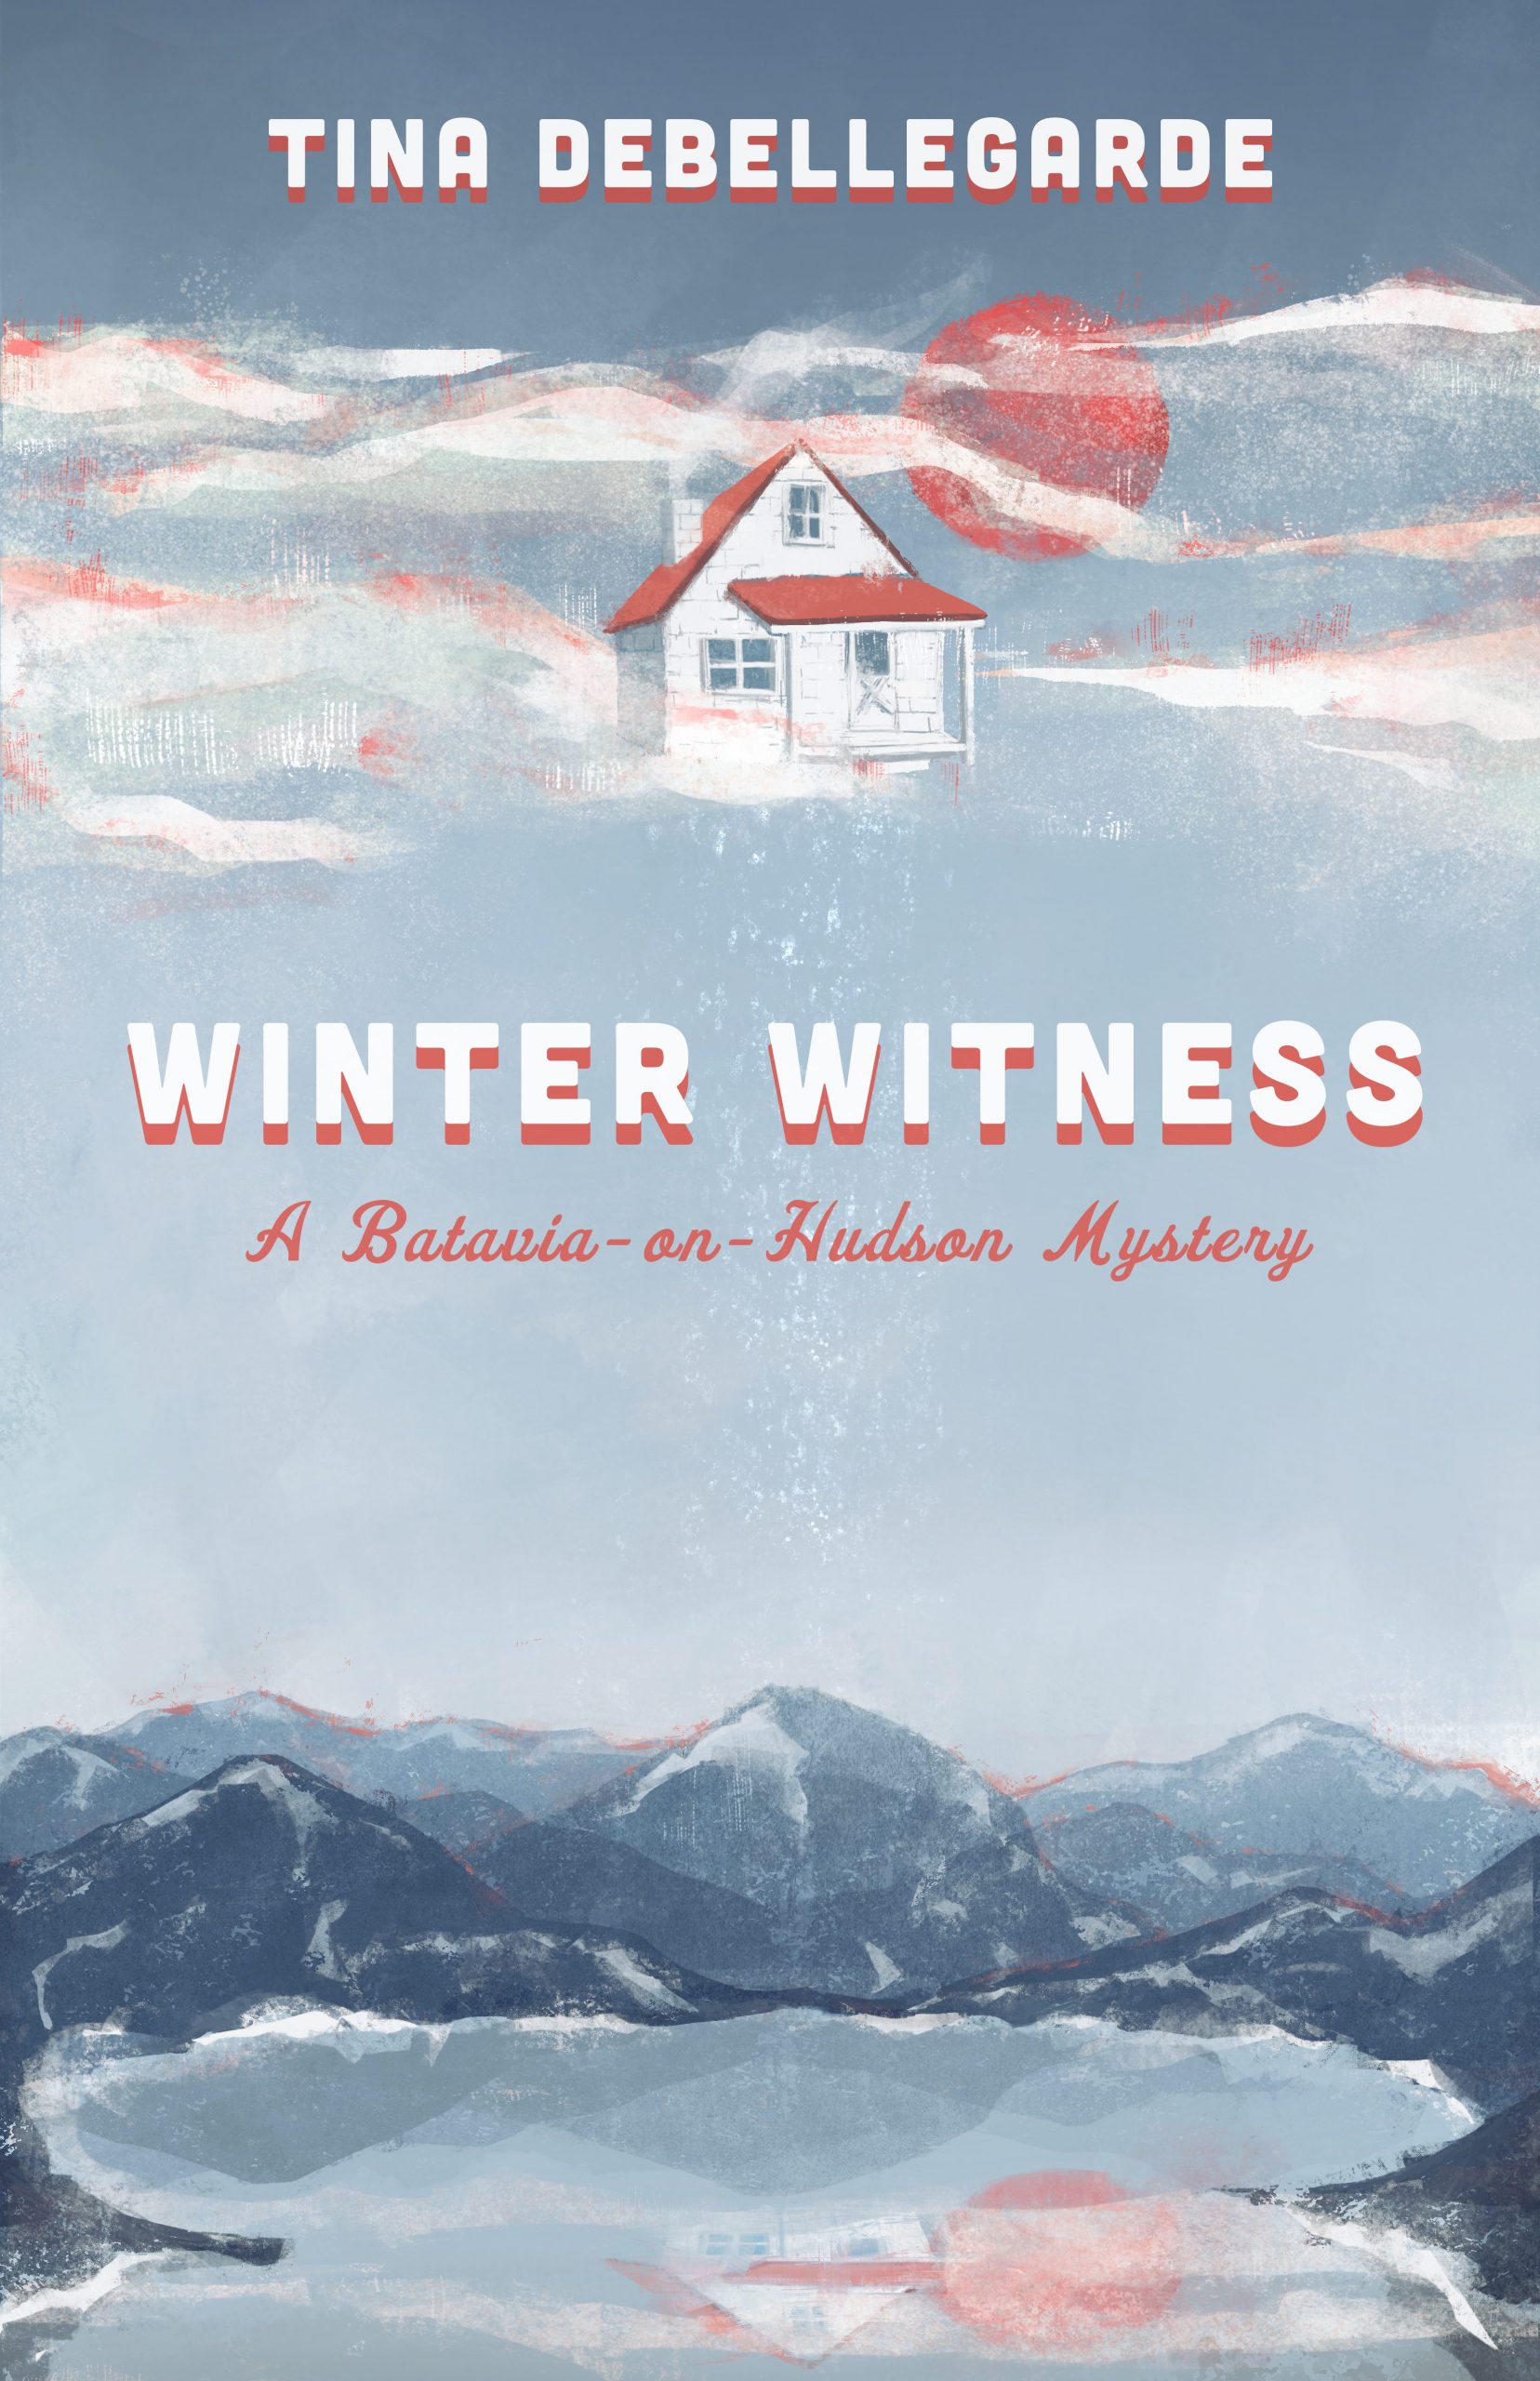 Winter Witness by Tina deBellegarde